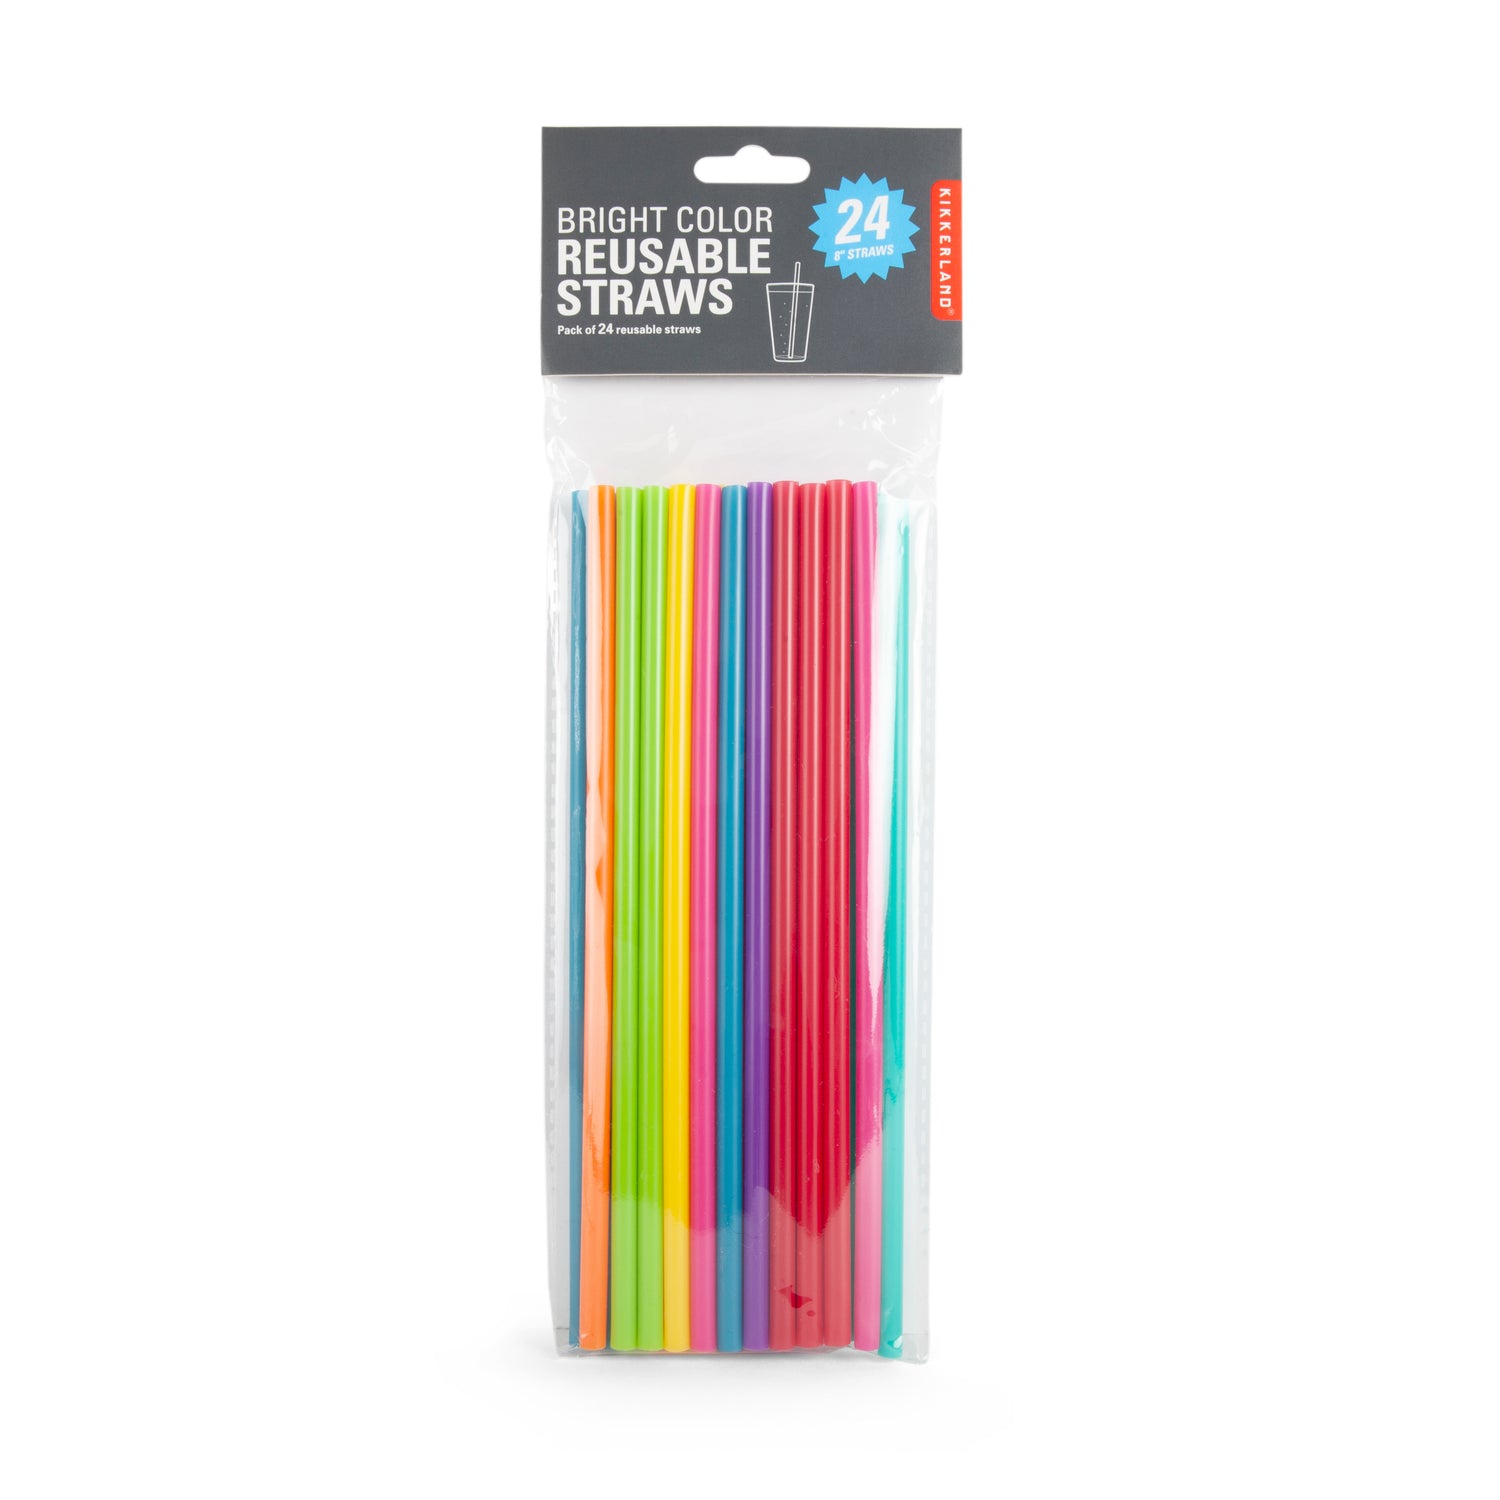 8” Bright Color Reusable Straws